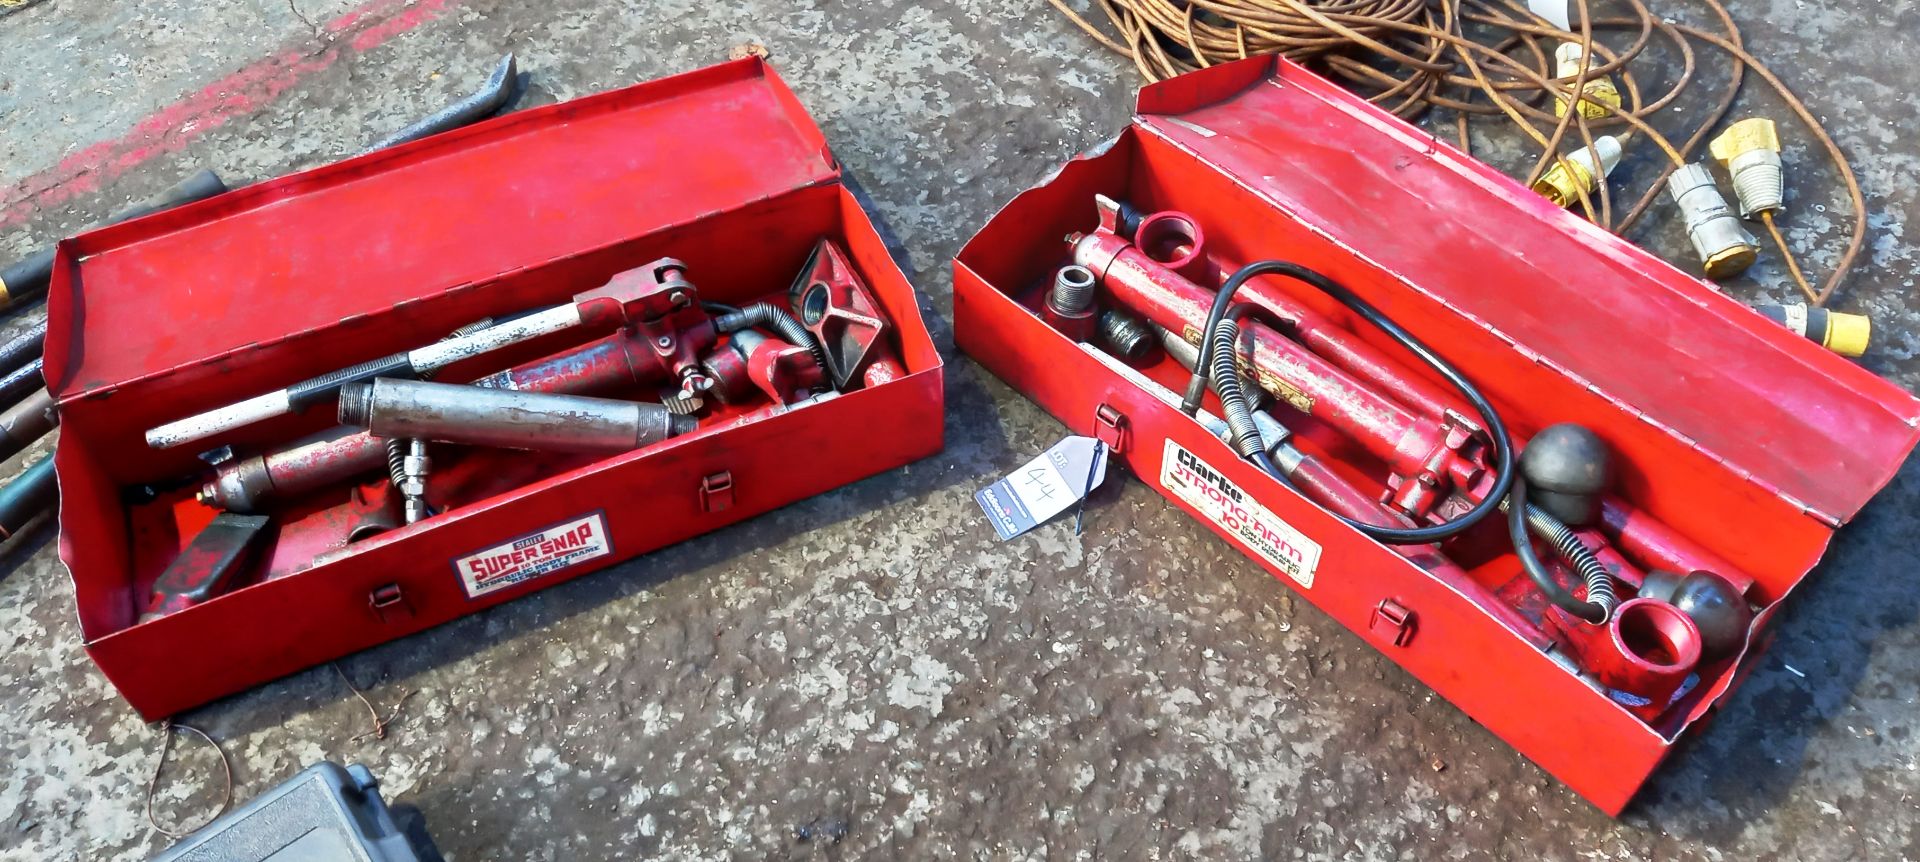 Clarke Strongarm 10ton Hydraulic Body Repair Kit & Sealey Super Snap 10ton Hydraulic Body Repair